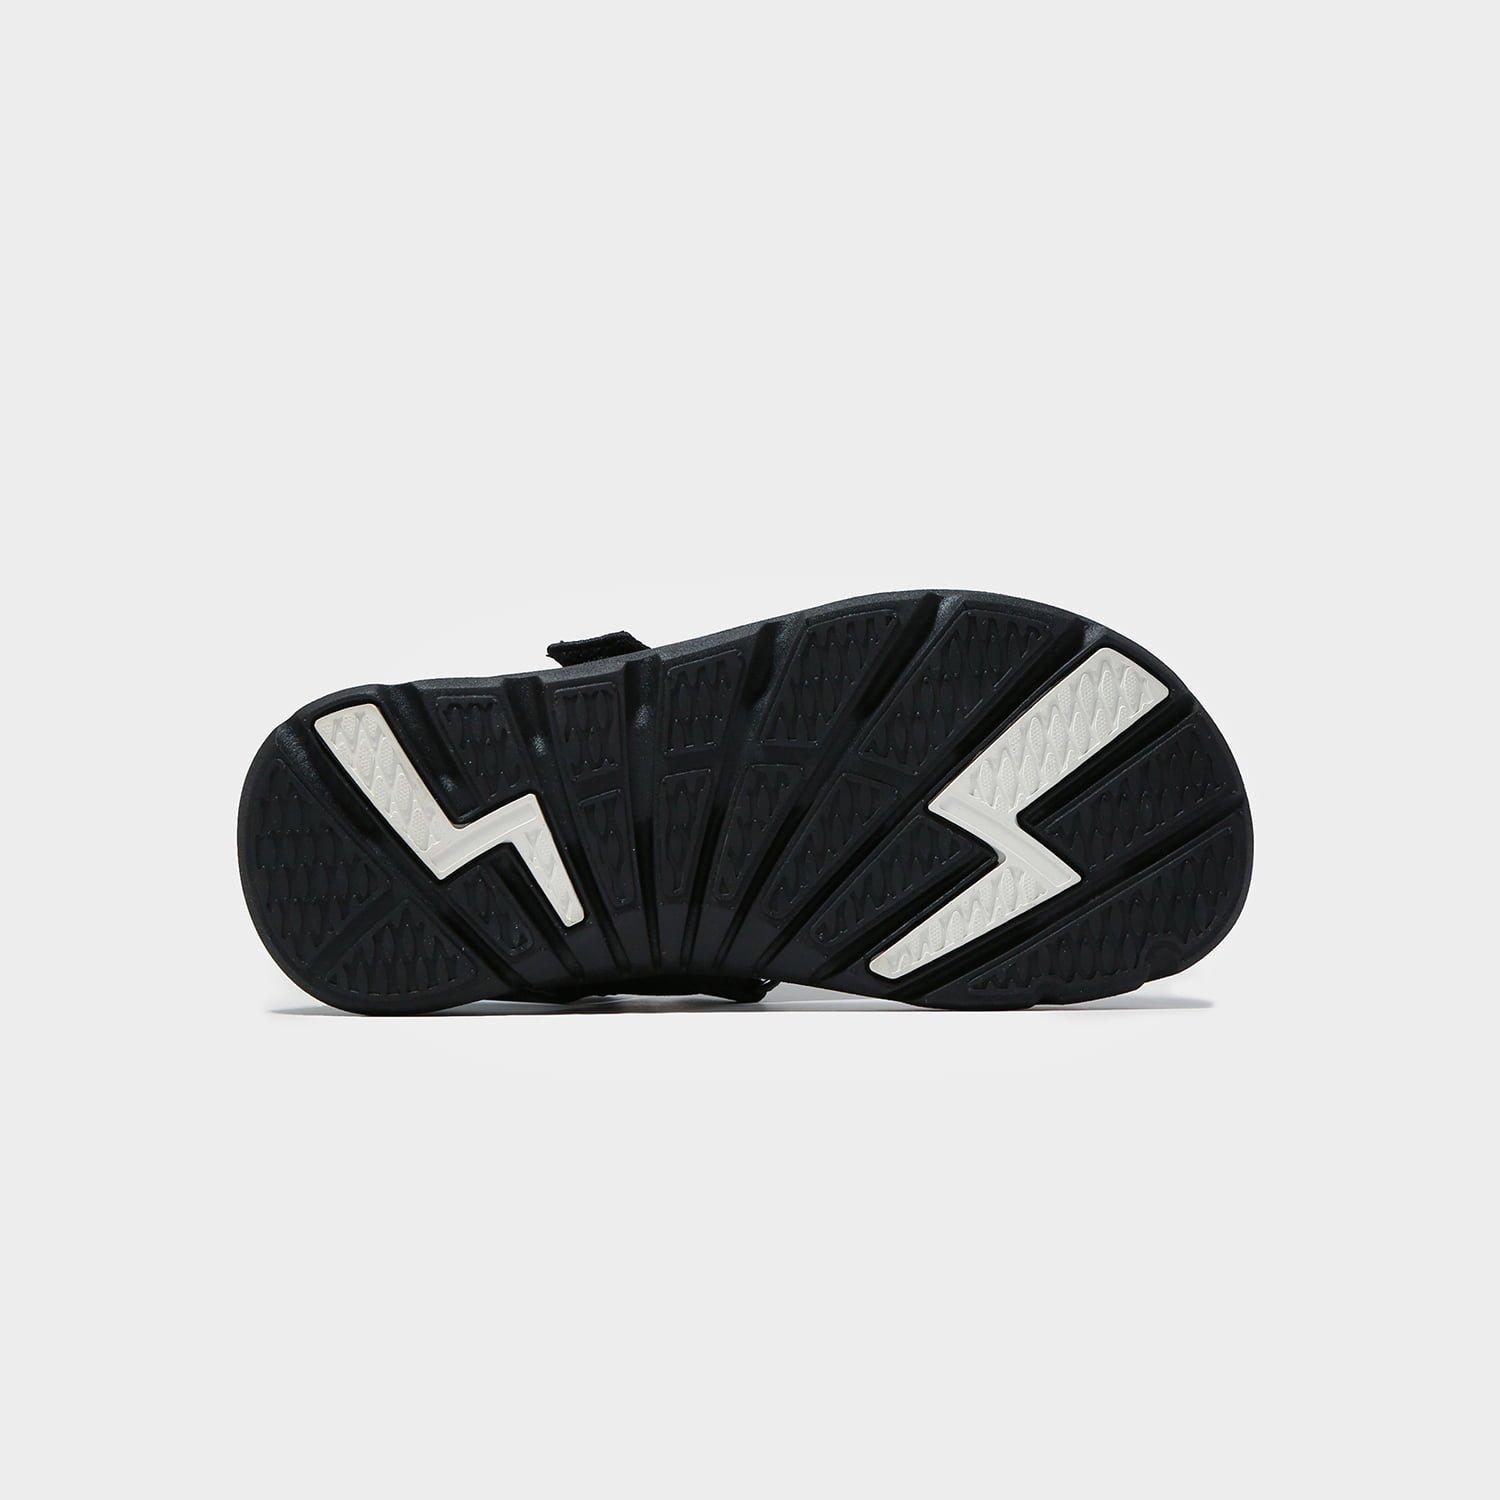 Giày nam sandals Shondo F6 Sport F6S301 (Đen)